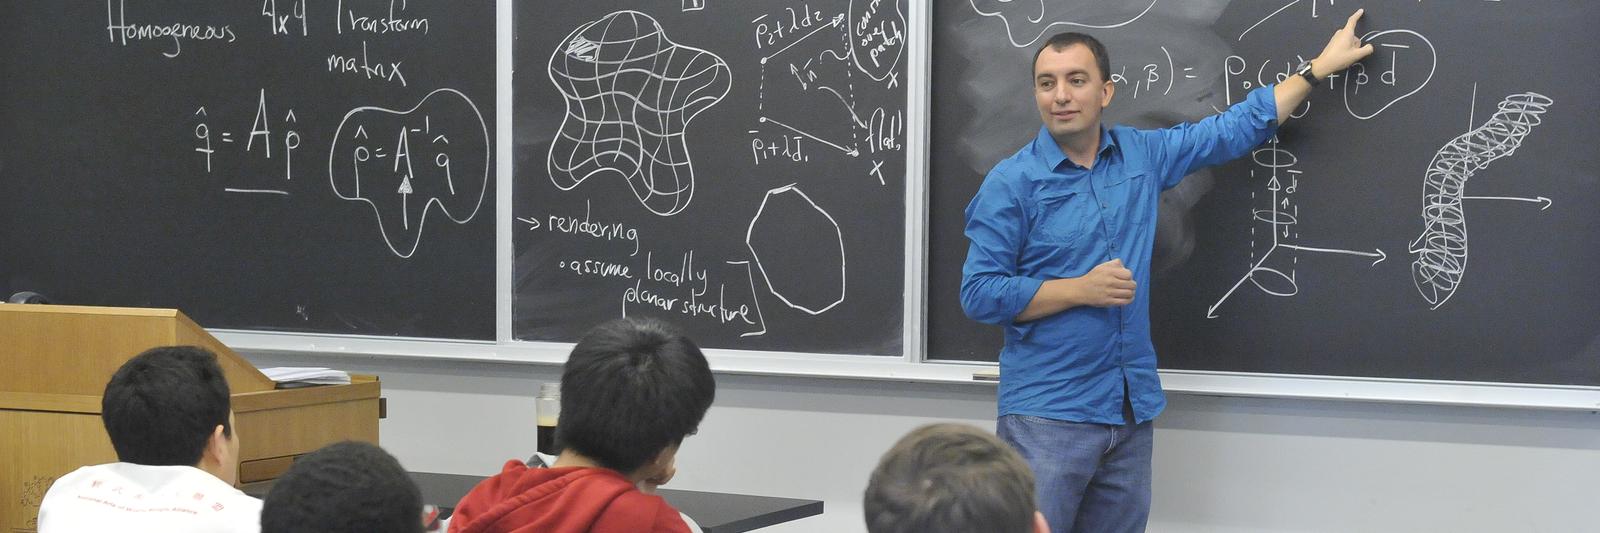 professor teaching students